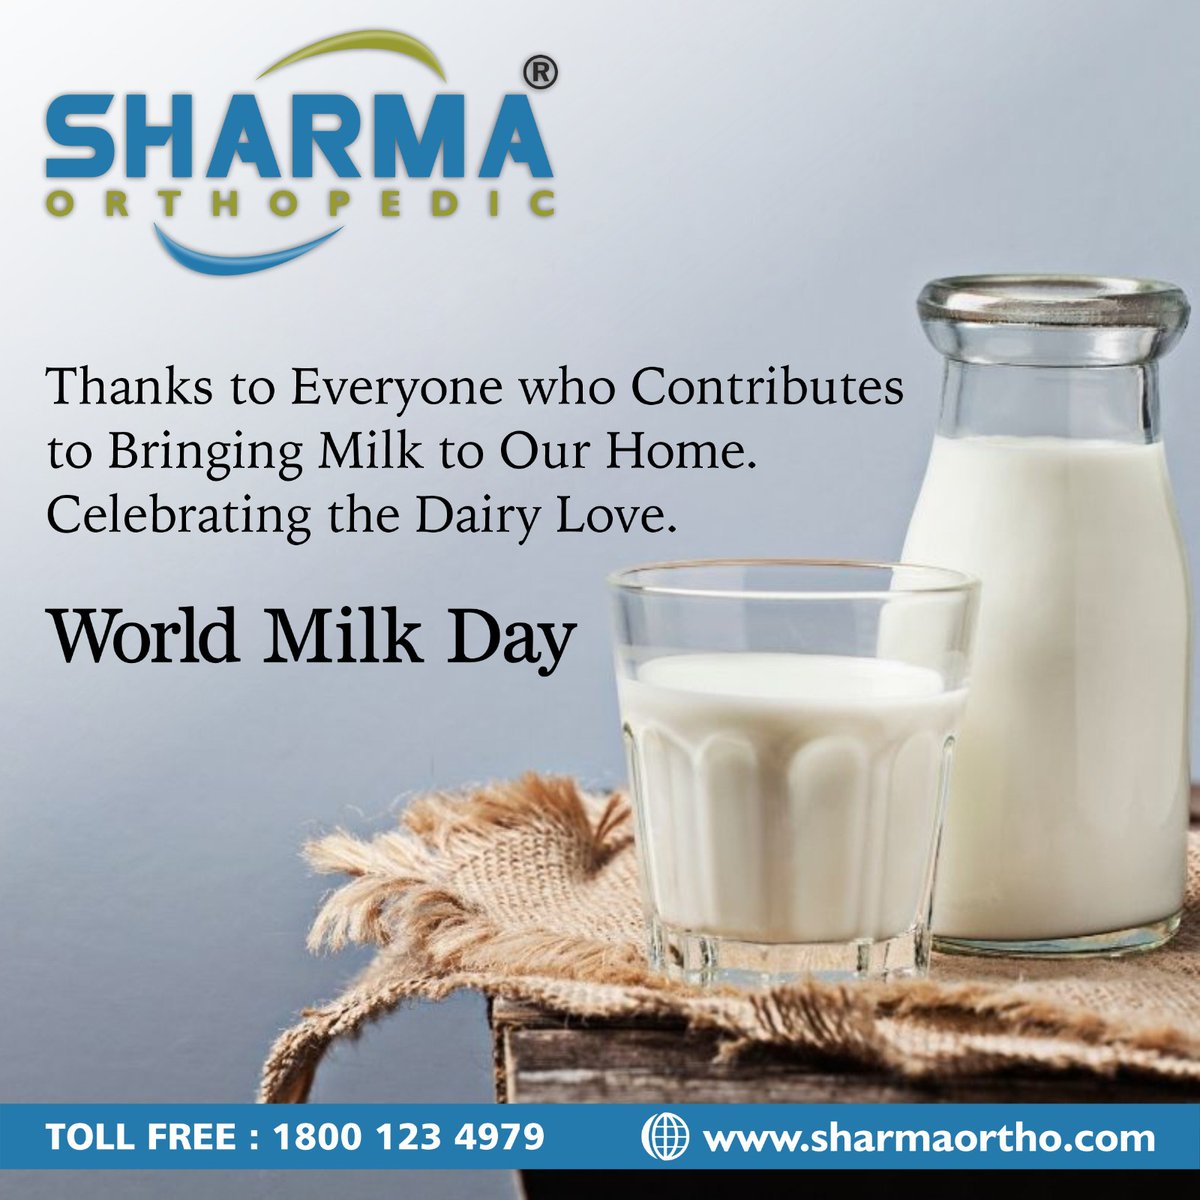 #sharmaorthopedicteam #milkproducts #milkbooster #WorldMilkDay #healthylifestyle #healthtips #healthyeating #HealthyLiving